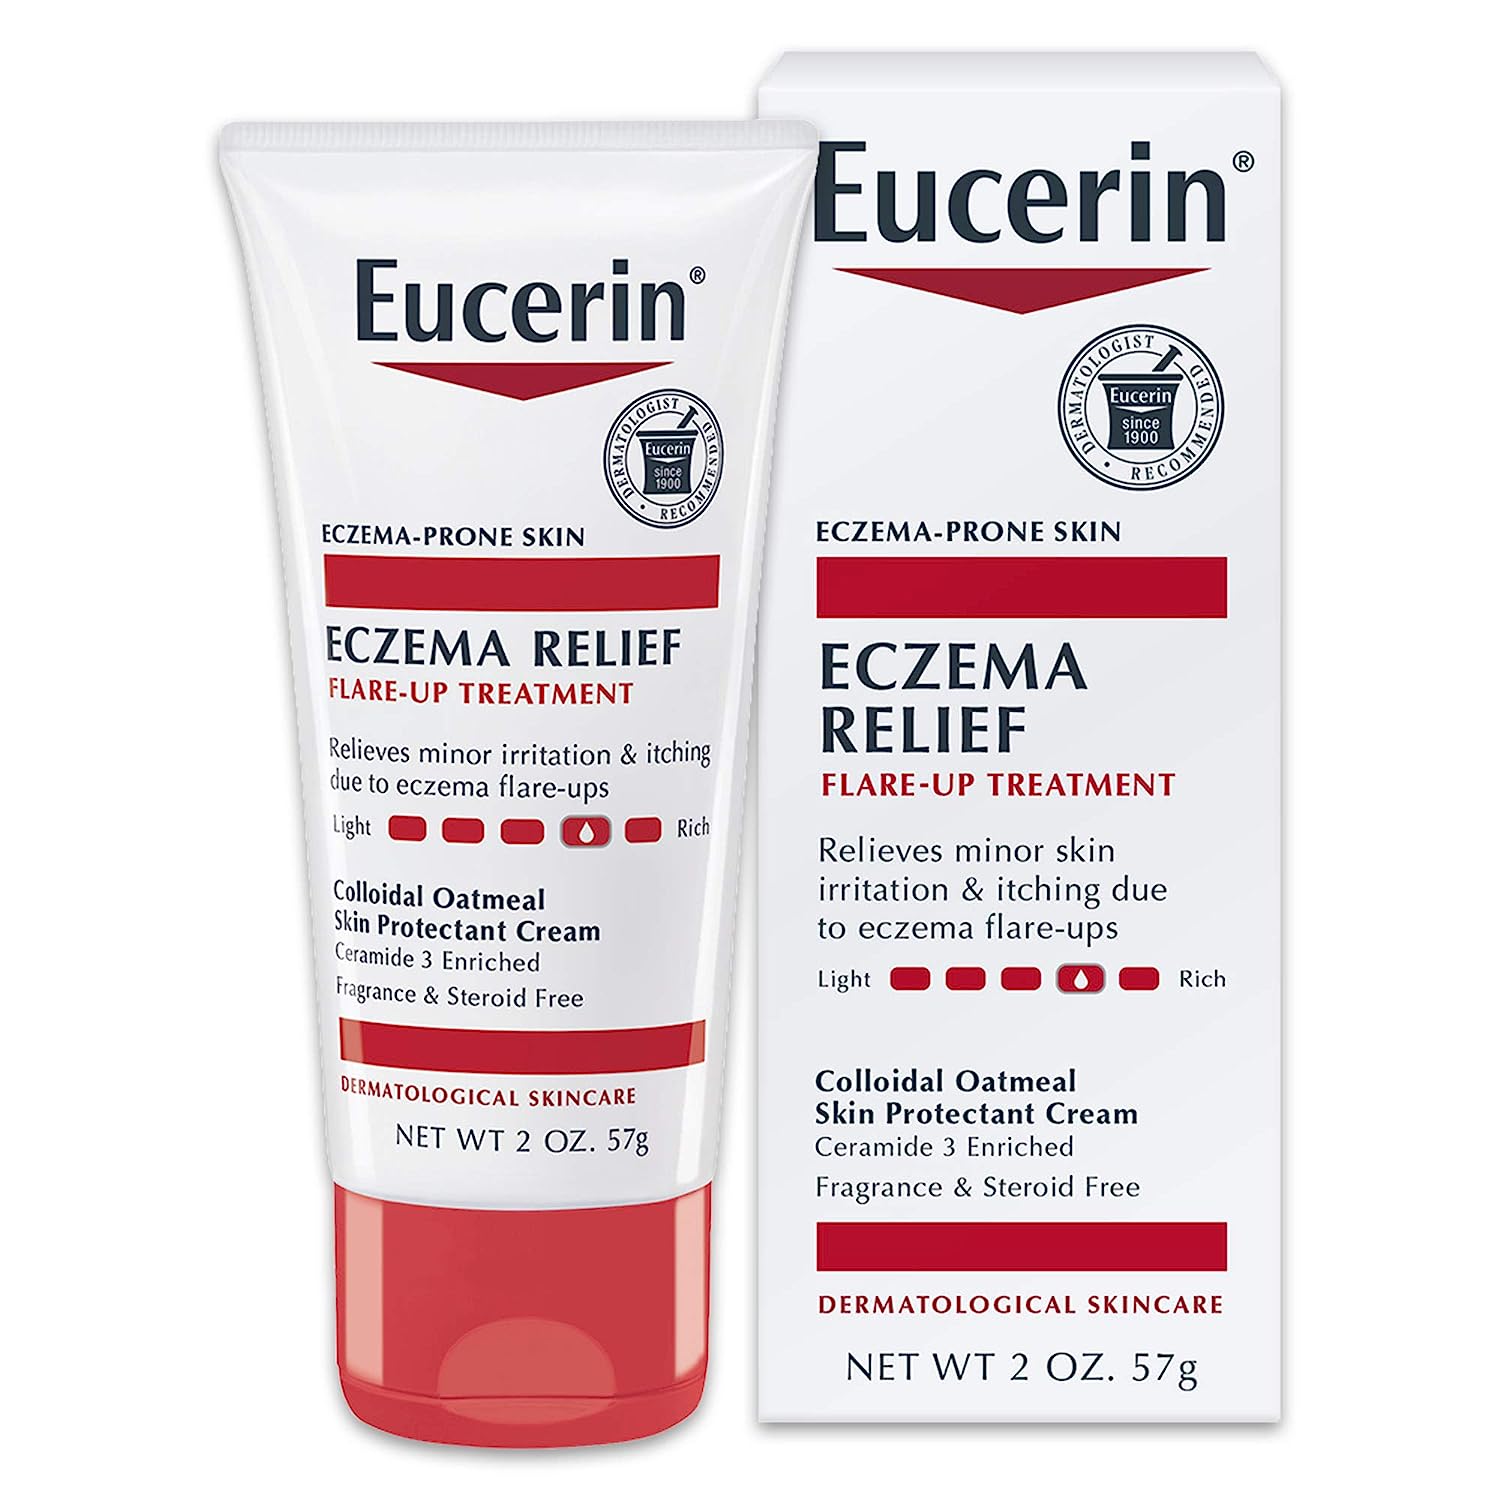 Eucerin Eczema Relief Flare-up Treatment - Provides Immediat